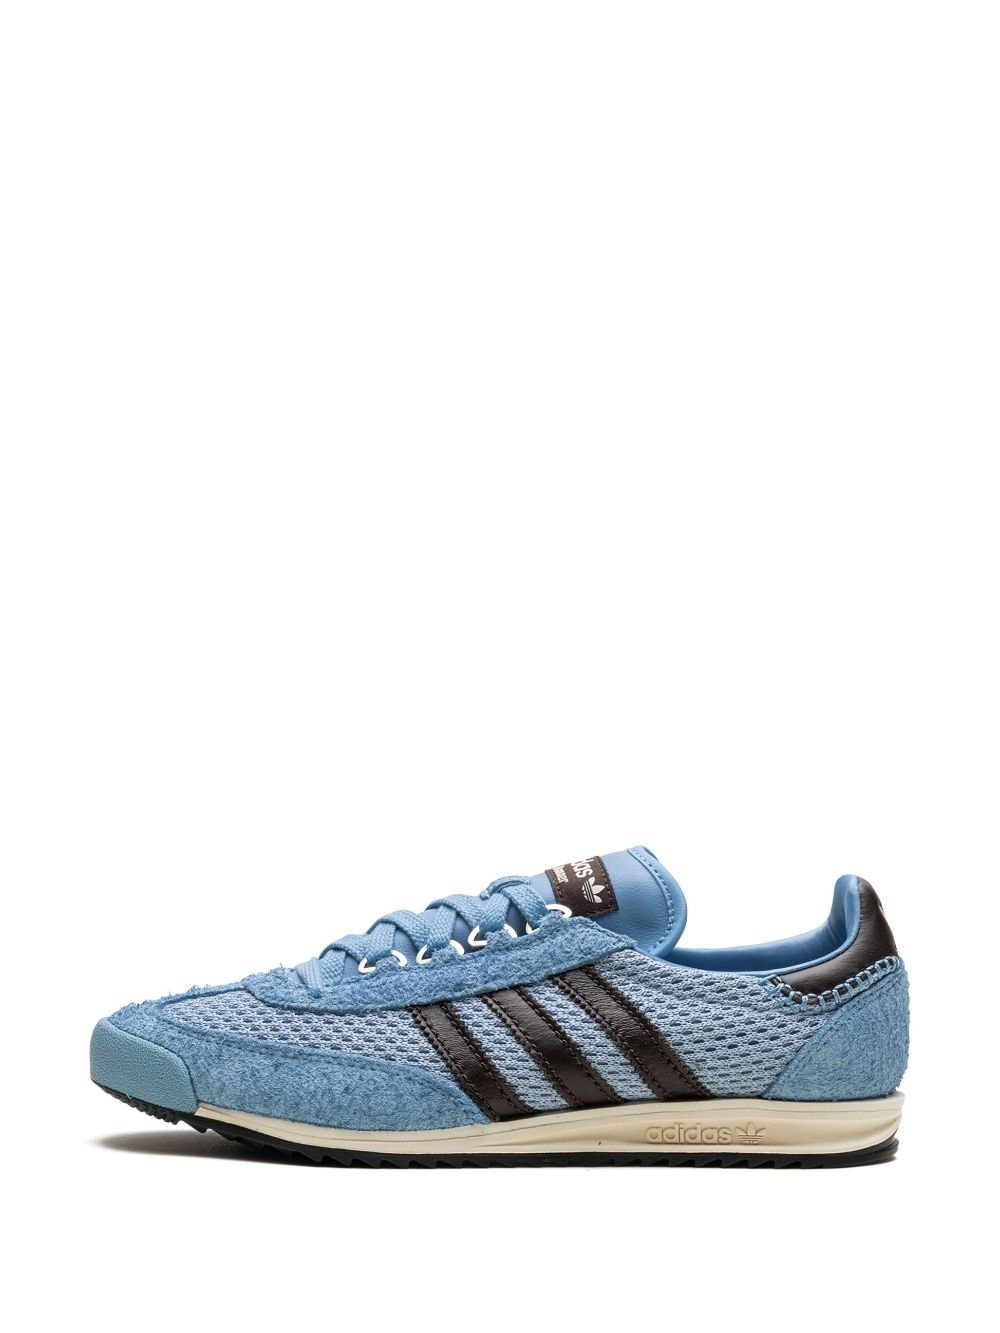 x Wales Bonner SL76 "Ash Blue" sneakers - 5